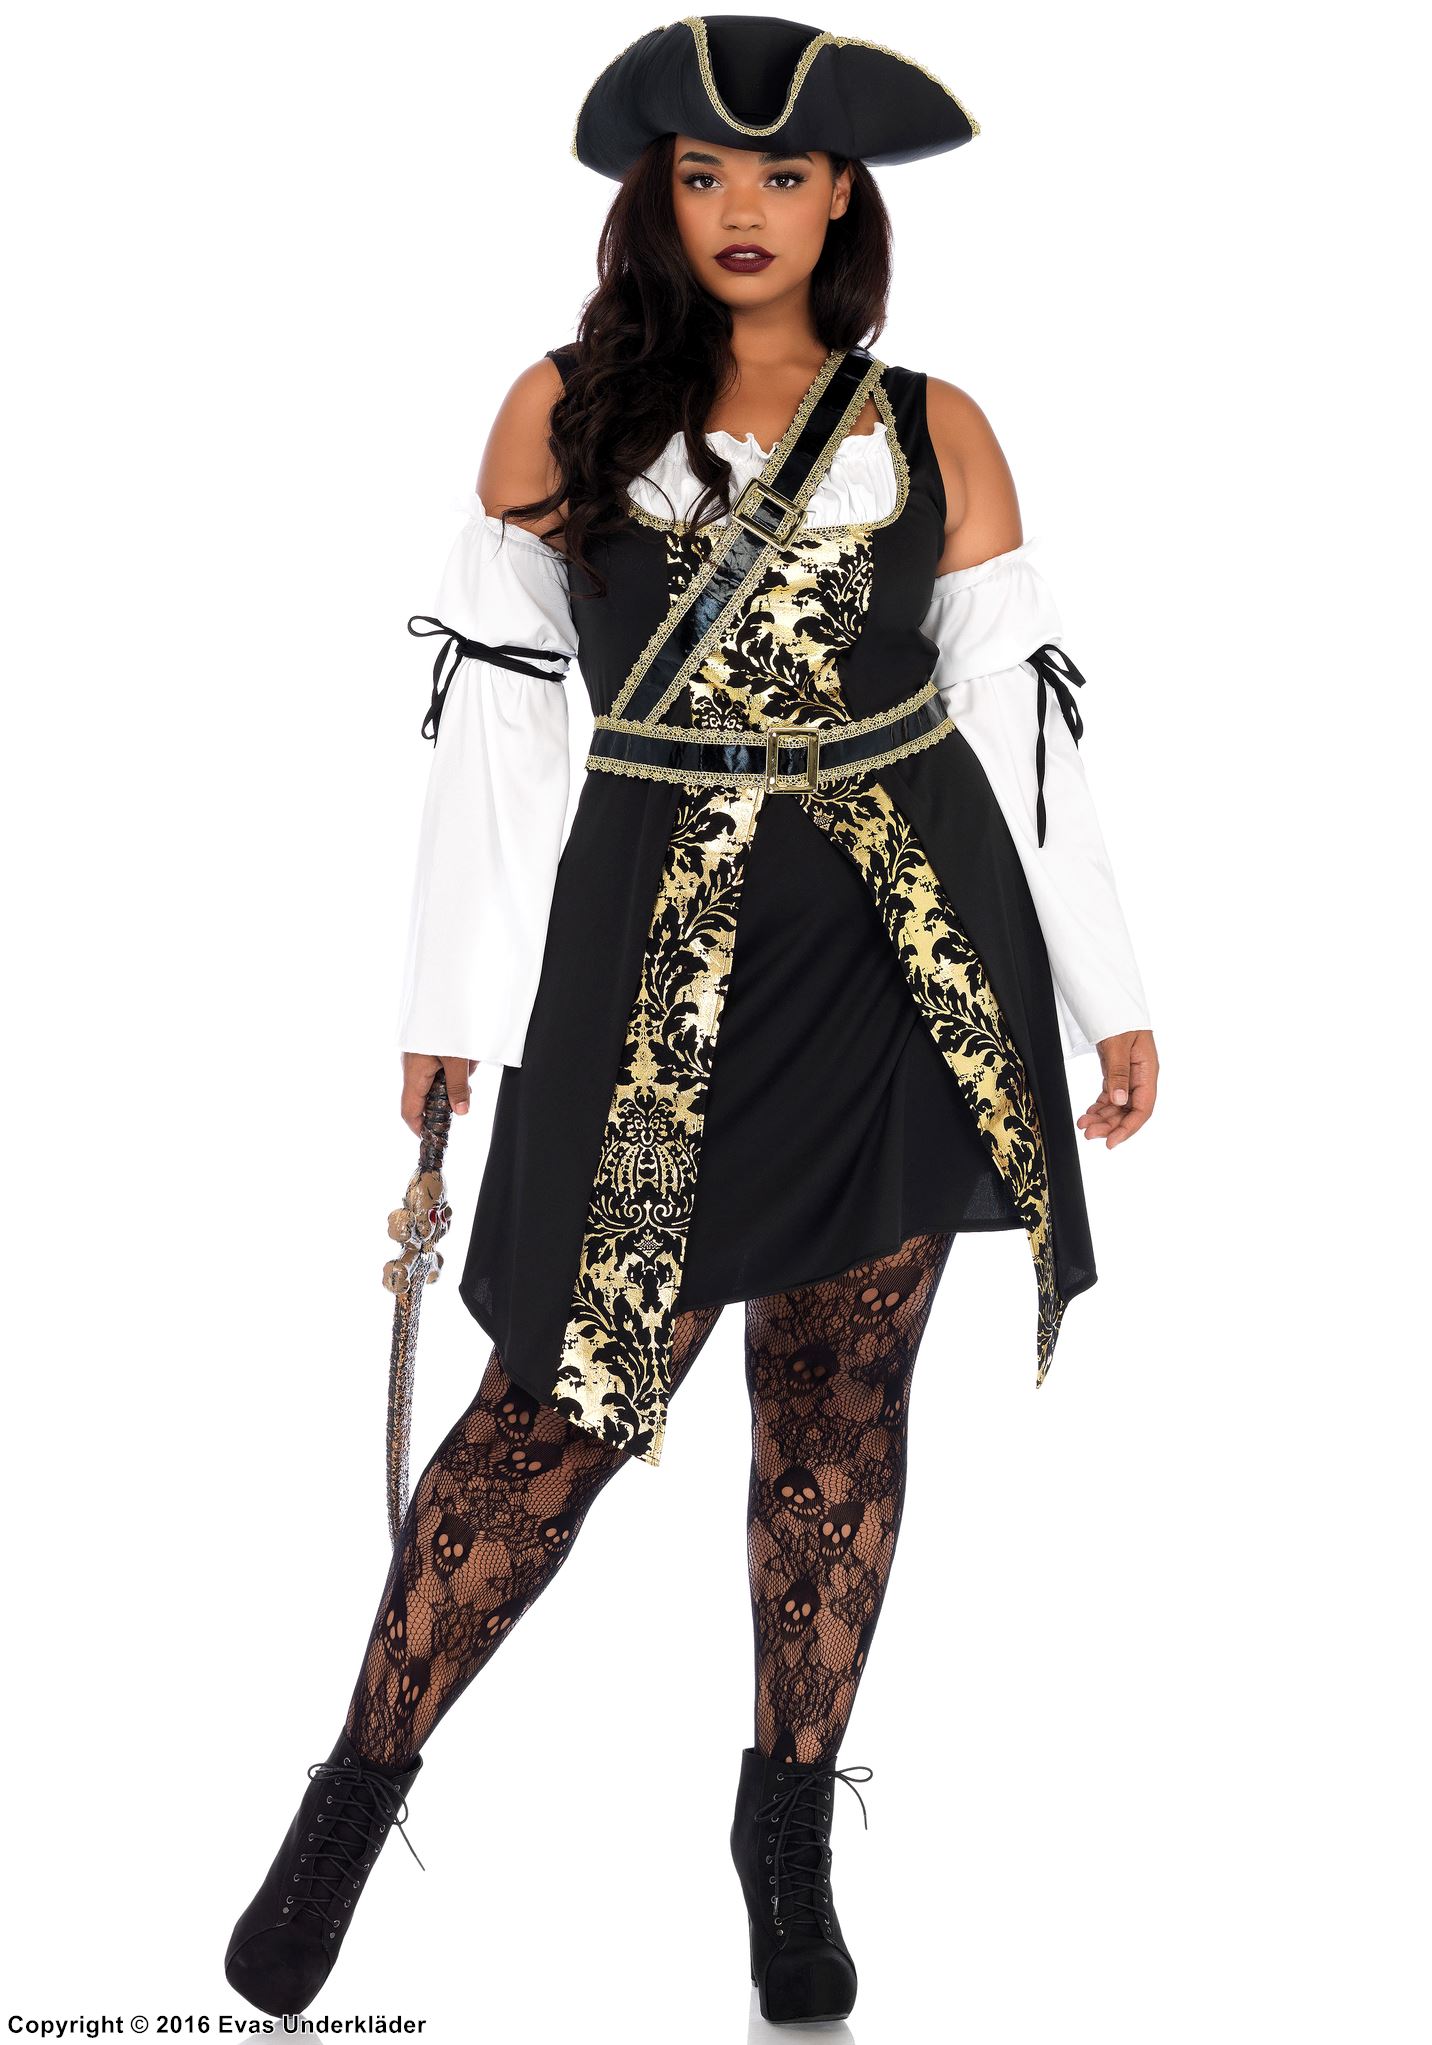 Female pirate captain, costume dress, brocade, belt, XL to 4XL